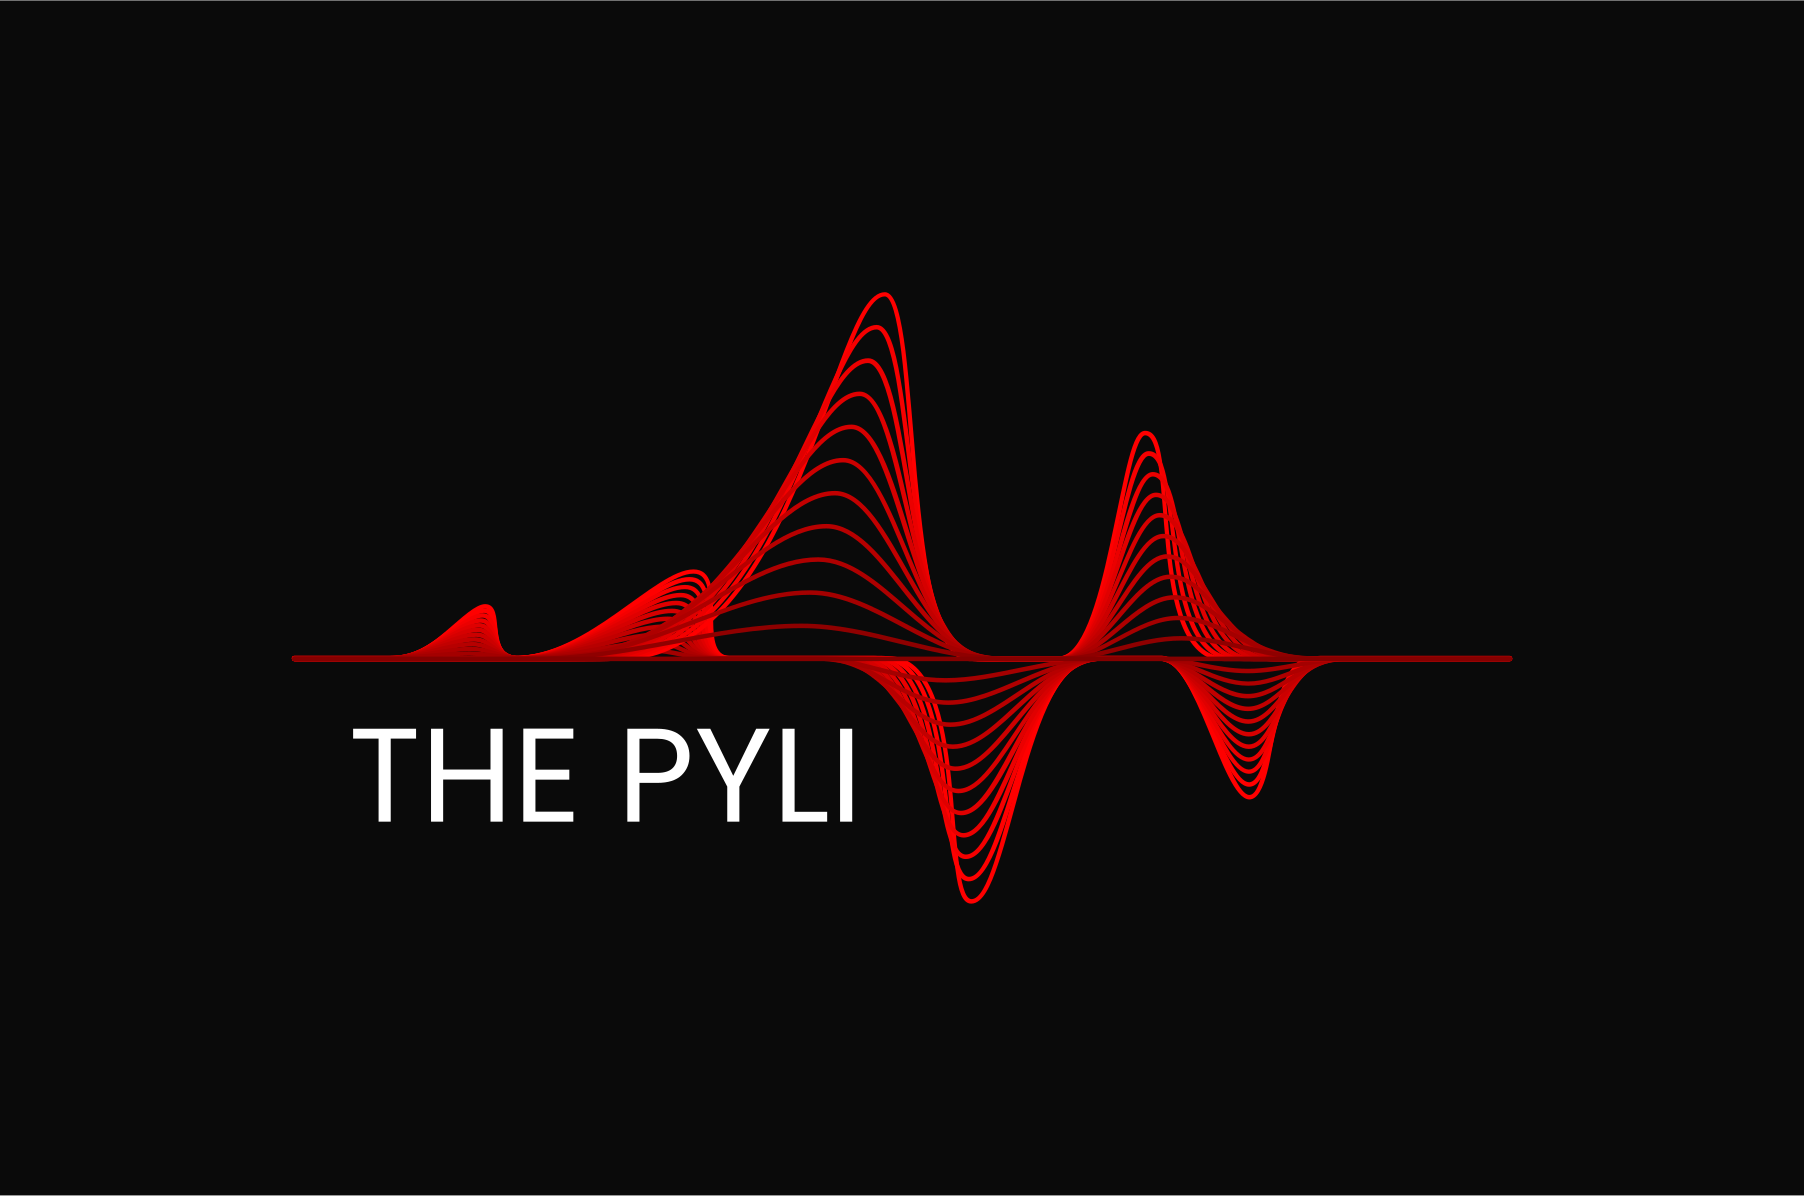 The Pyli